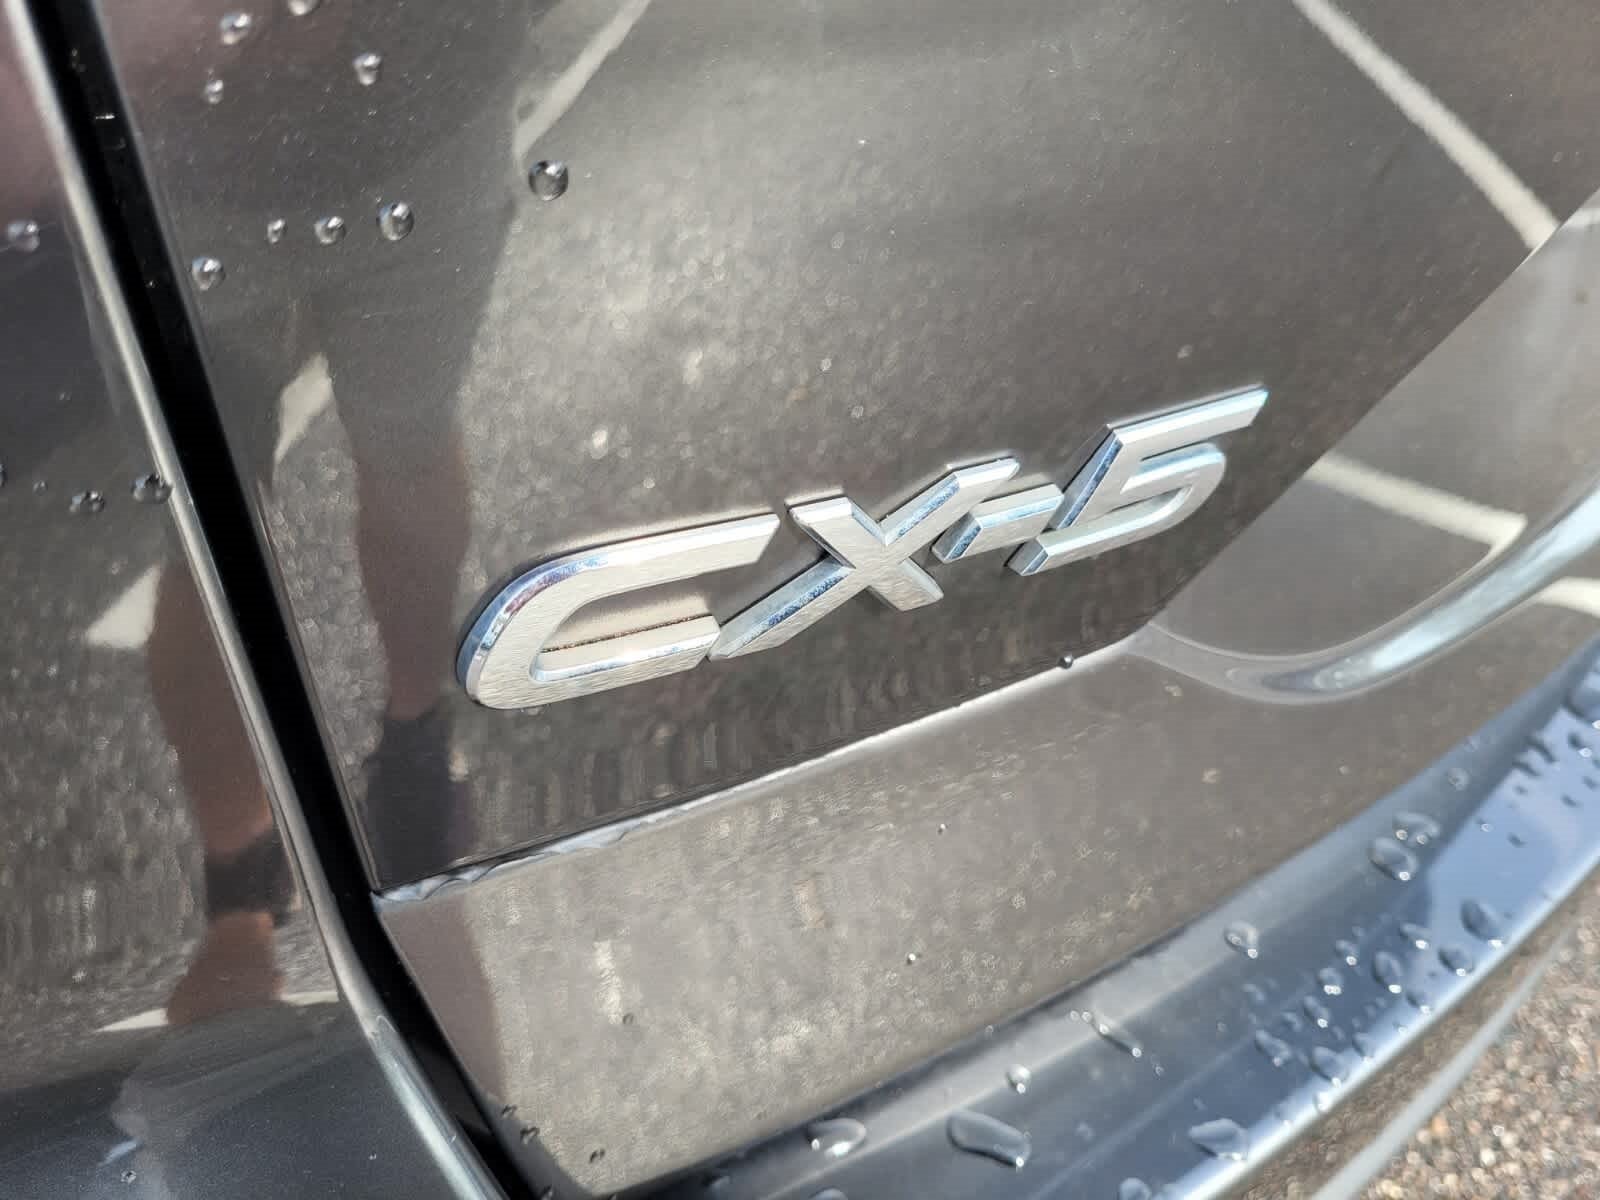 2017 Mazda Mazda CX-5 Touring FWD